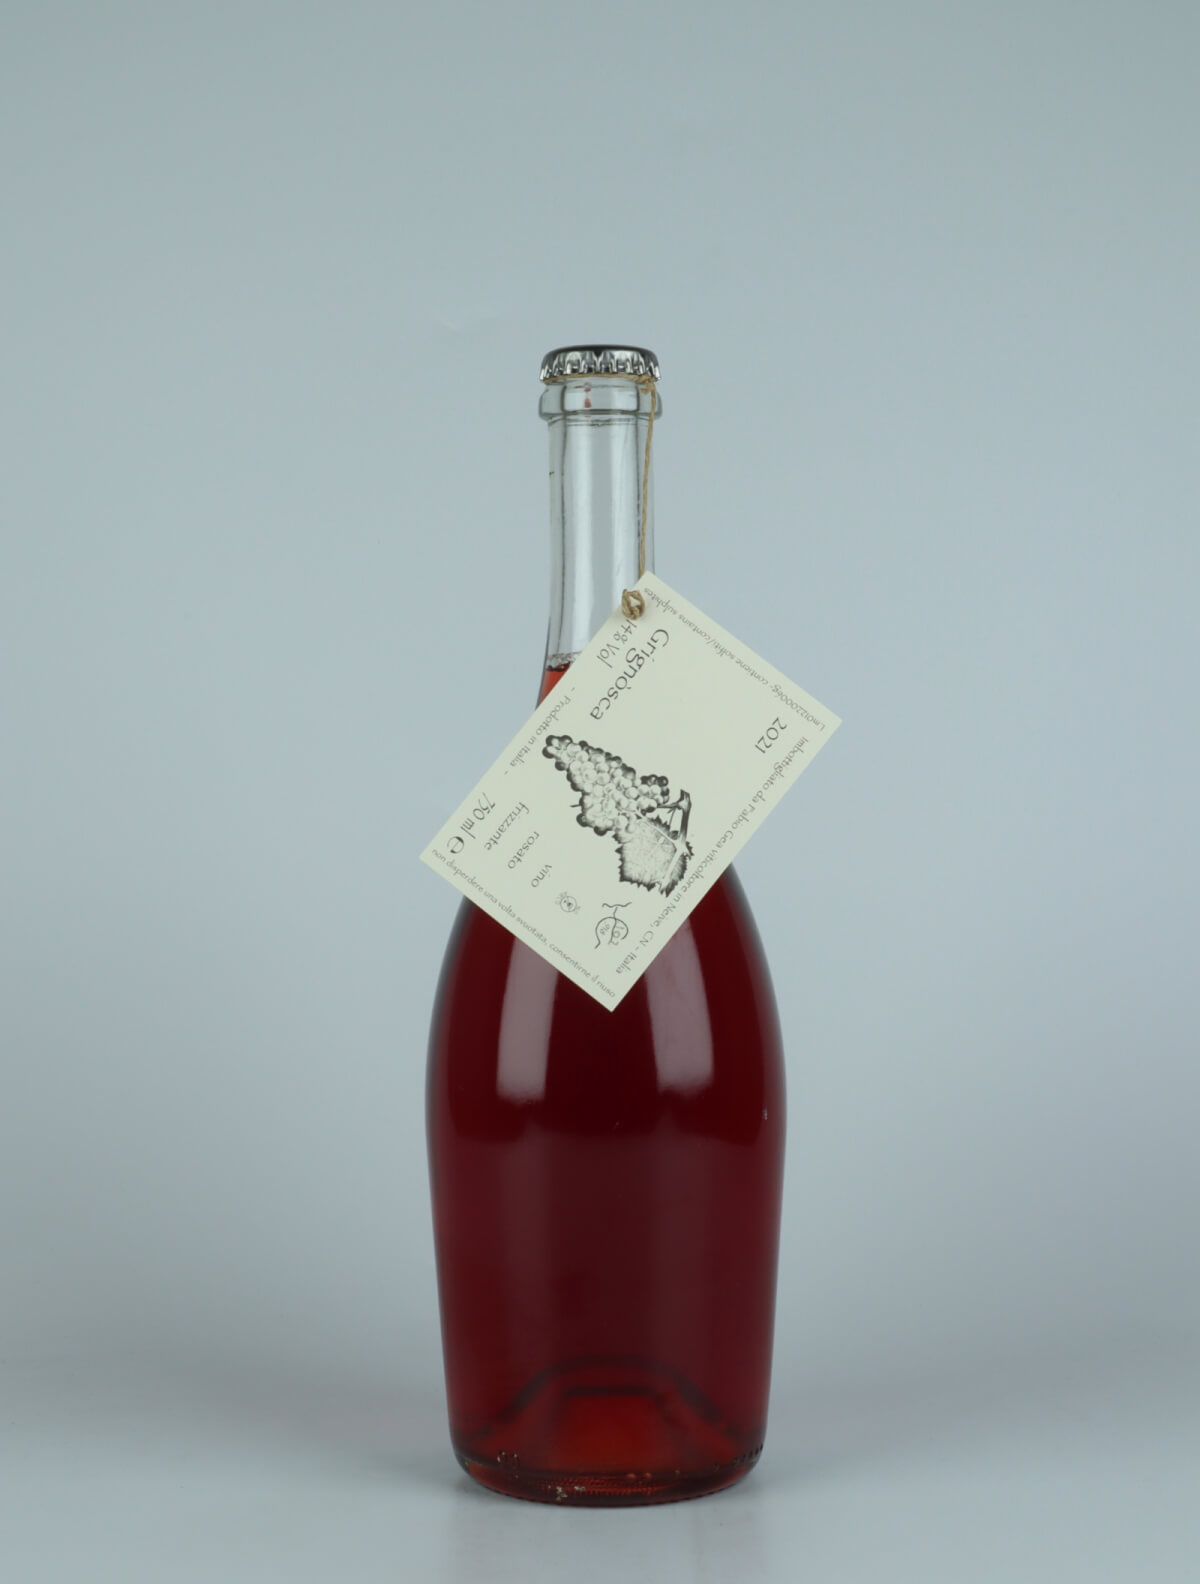 A bottle 2021 Grignosca Sparkling from Fabio Gea, Piedmont in Italy